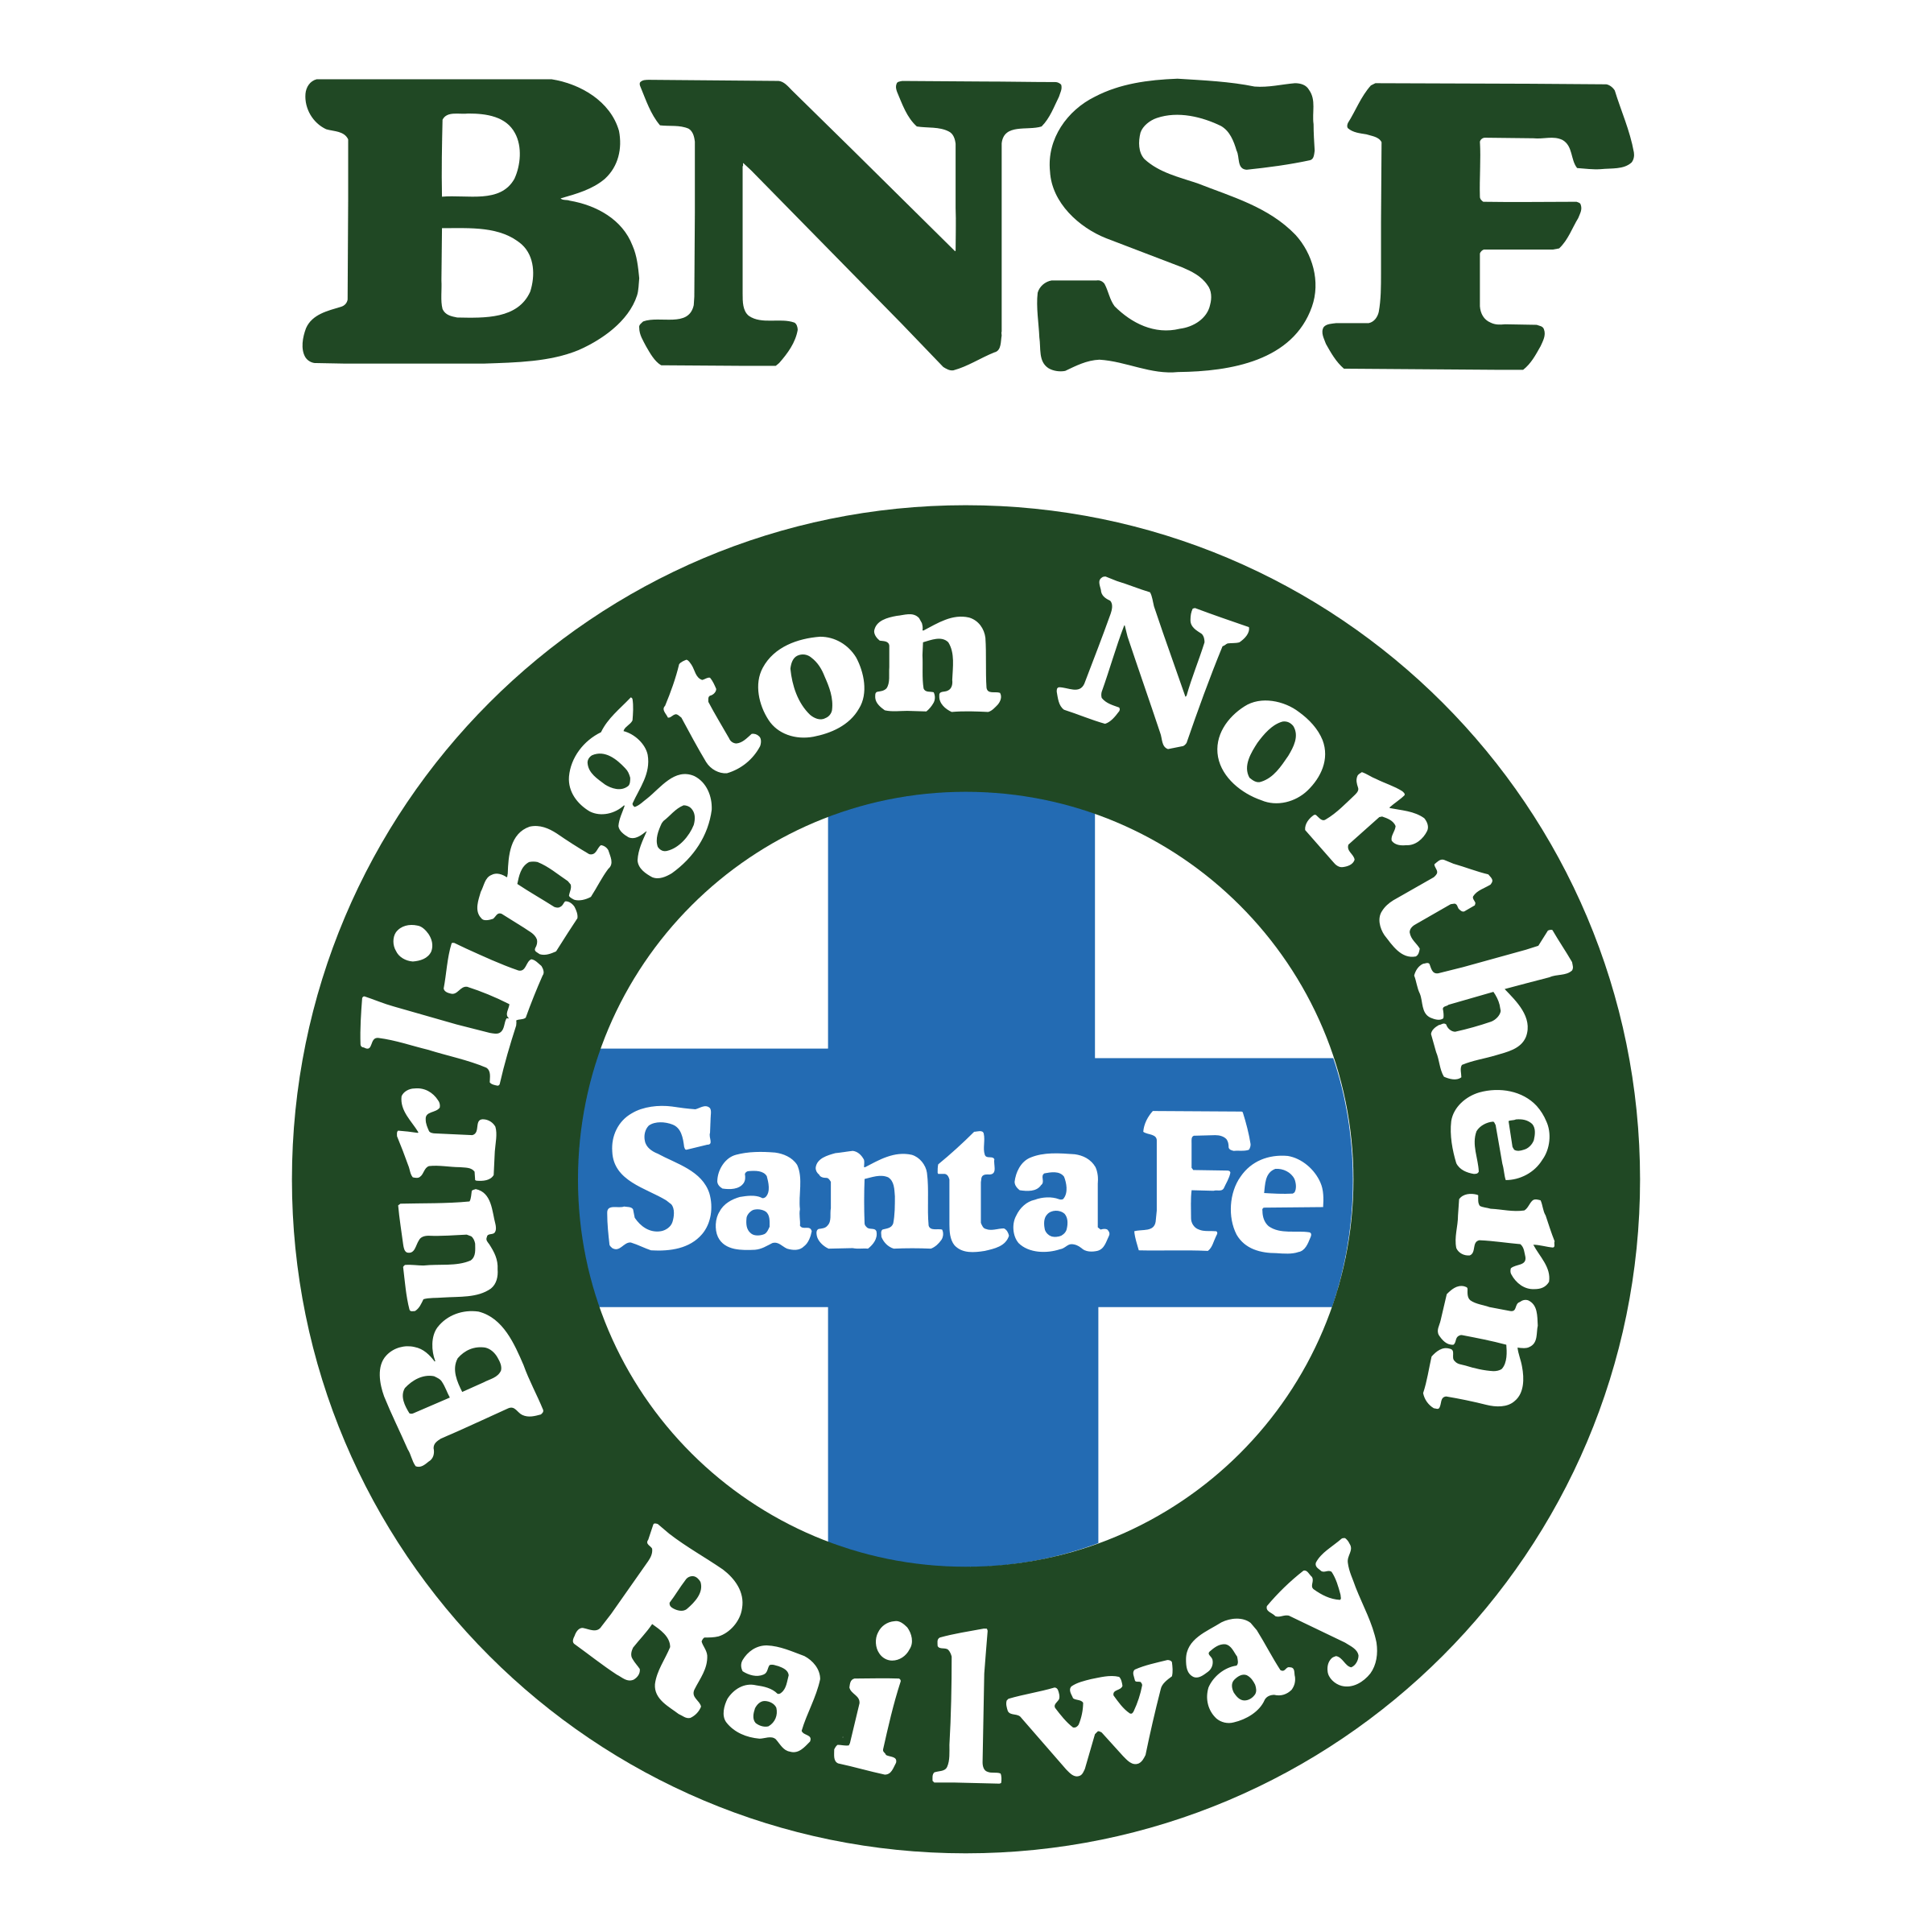 BNSF Logo - BNSF Logo PNG Transparent & SVG Vector - Freebie Supply